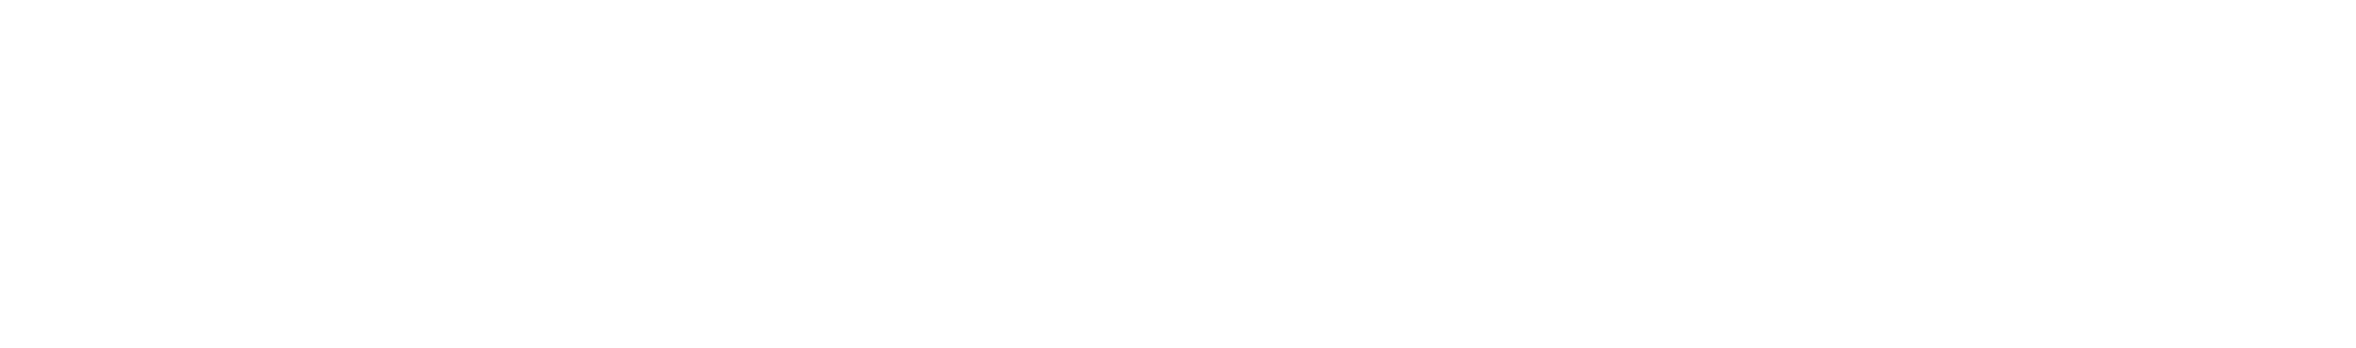 Logo alternativo en blanco